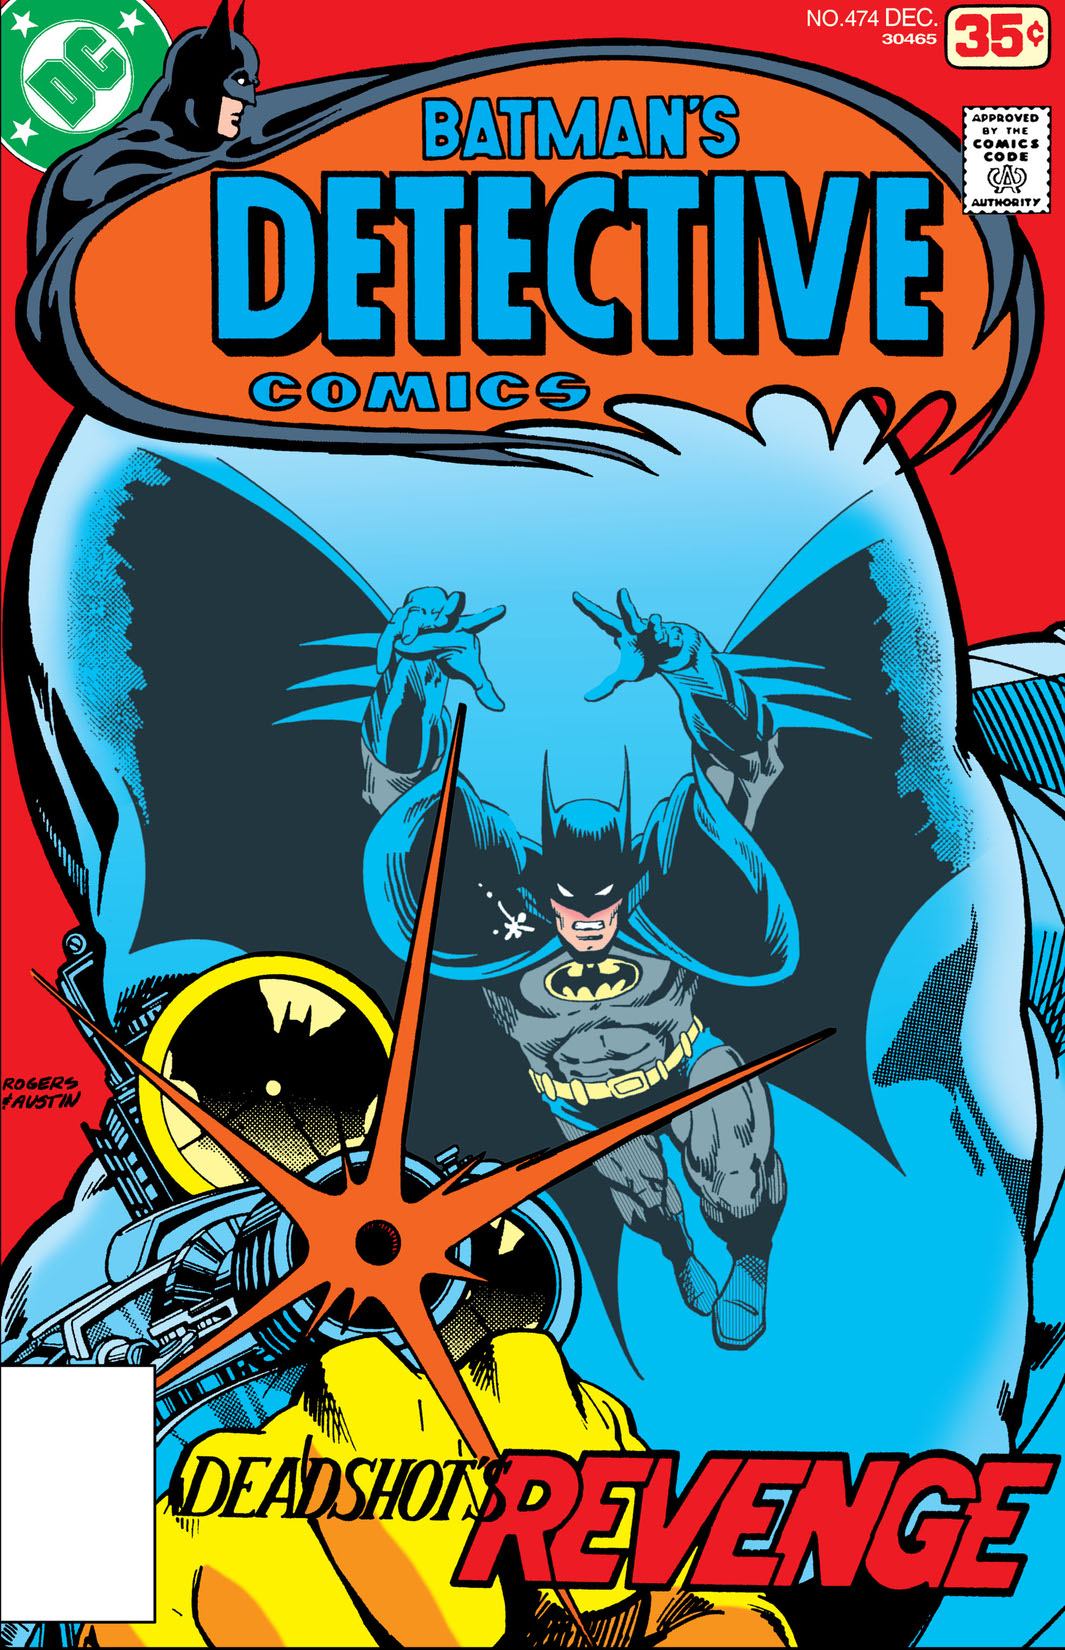 Detective Comics (1937-) #474 preview images